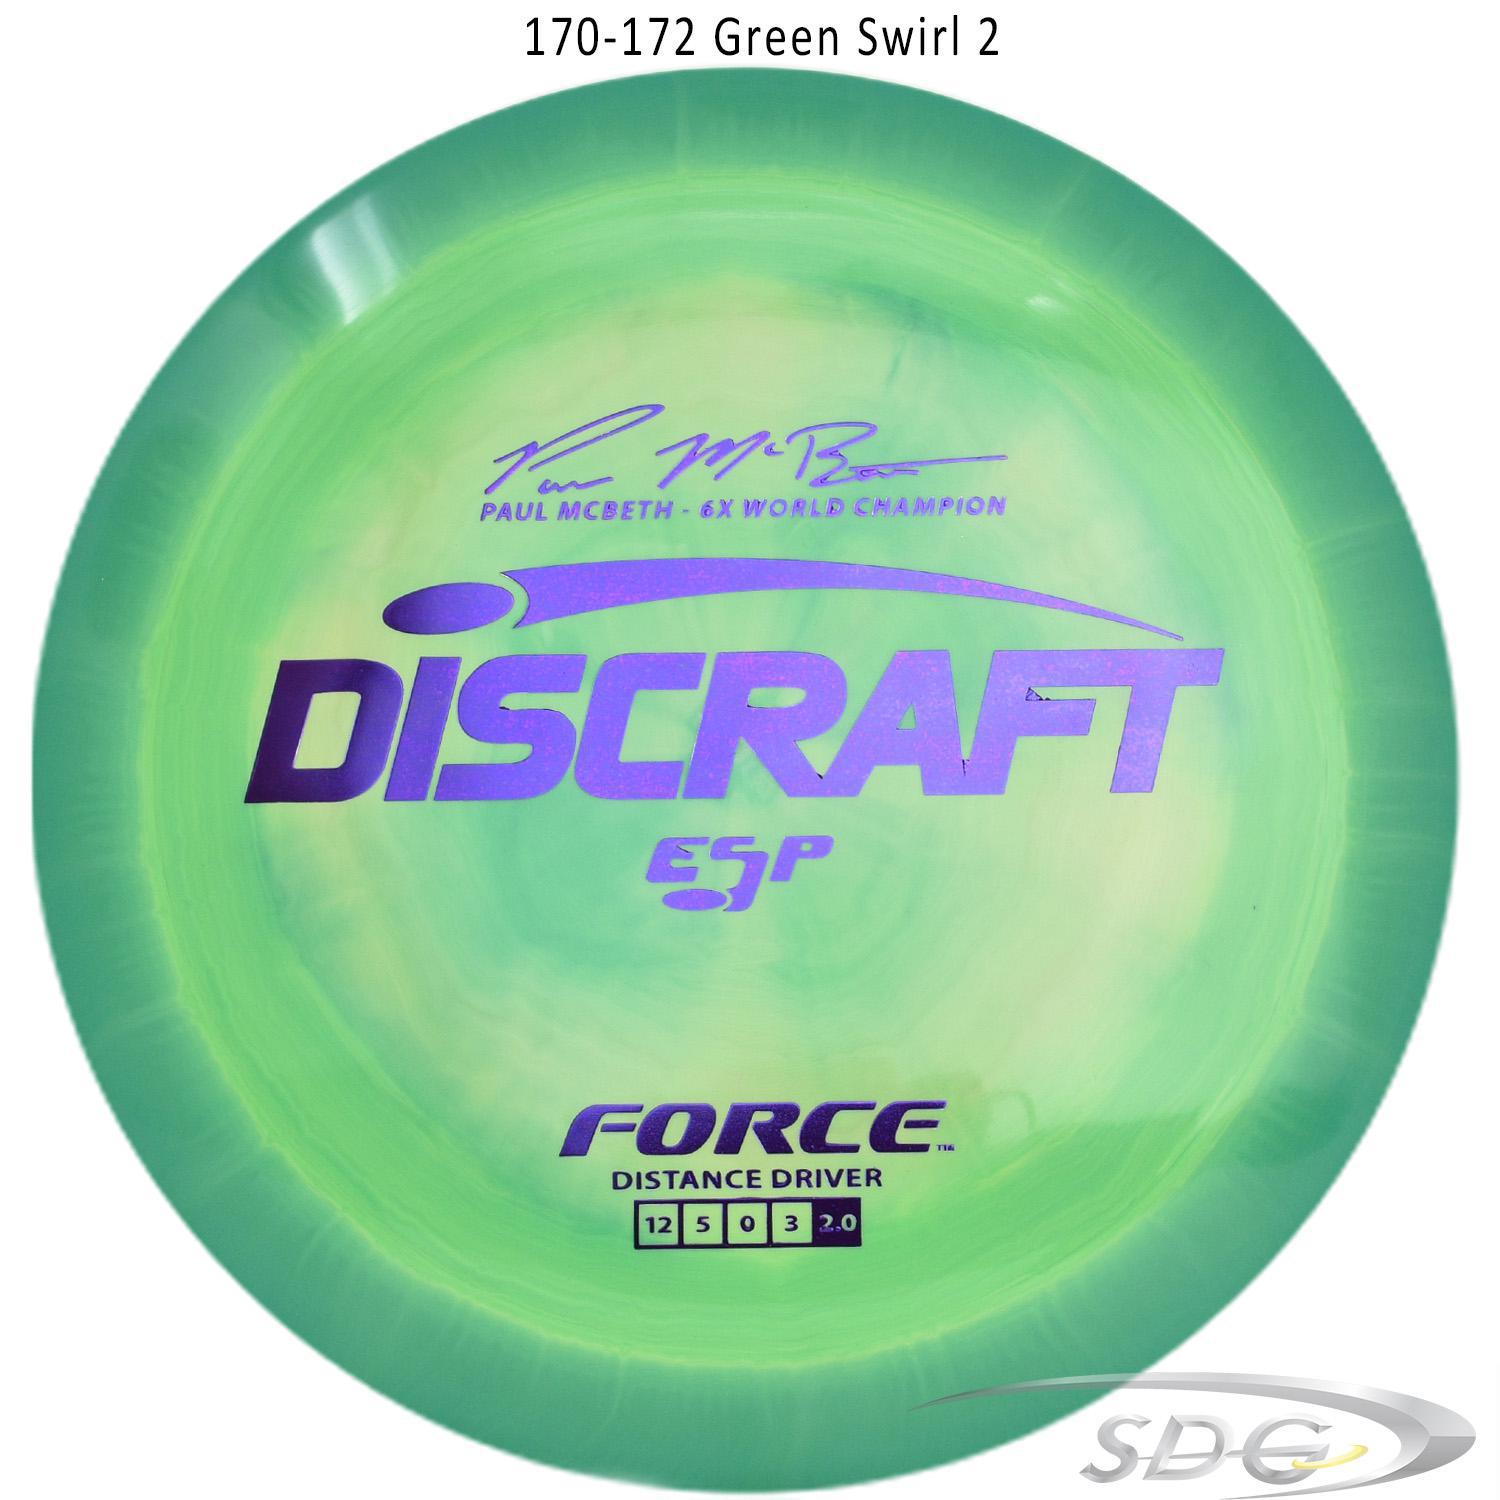 discraft-esp-force-6x-paul-mcbeth-signature-disc-golf-distance-driver 170-172 Green Swirl 2 